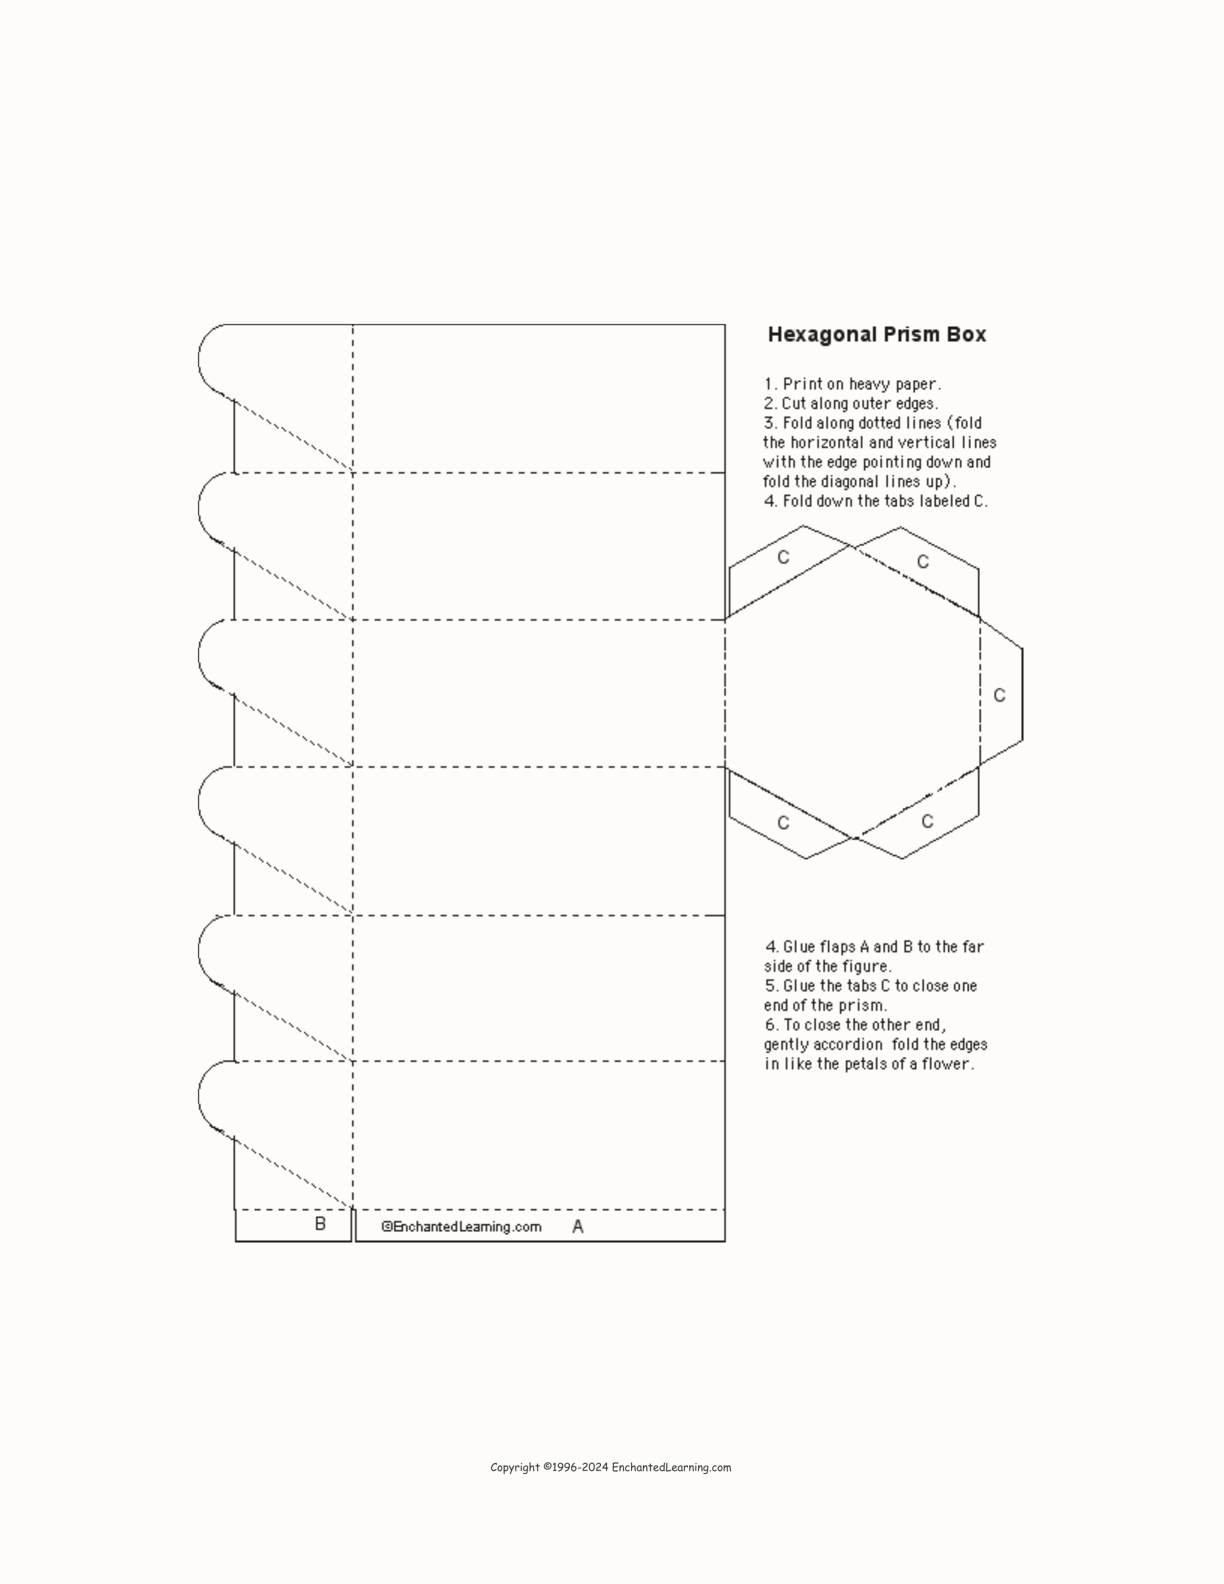 Hexagonal Prism Template interactive printout page 1